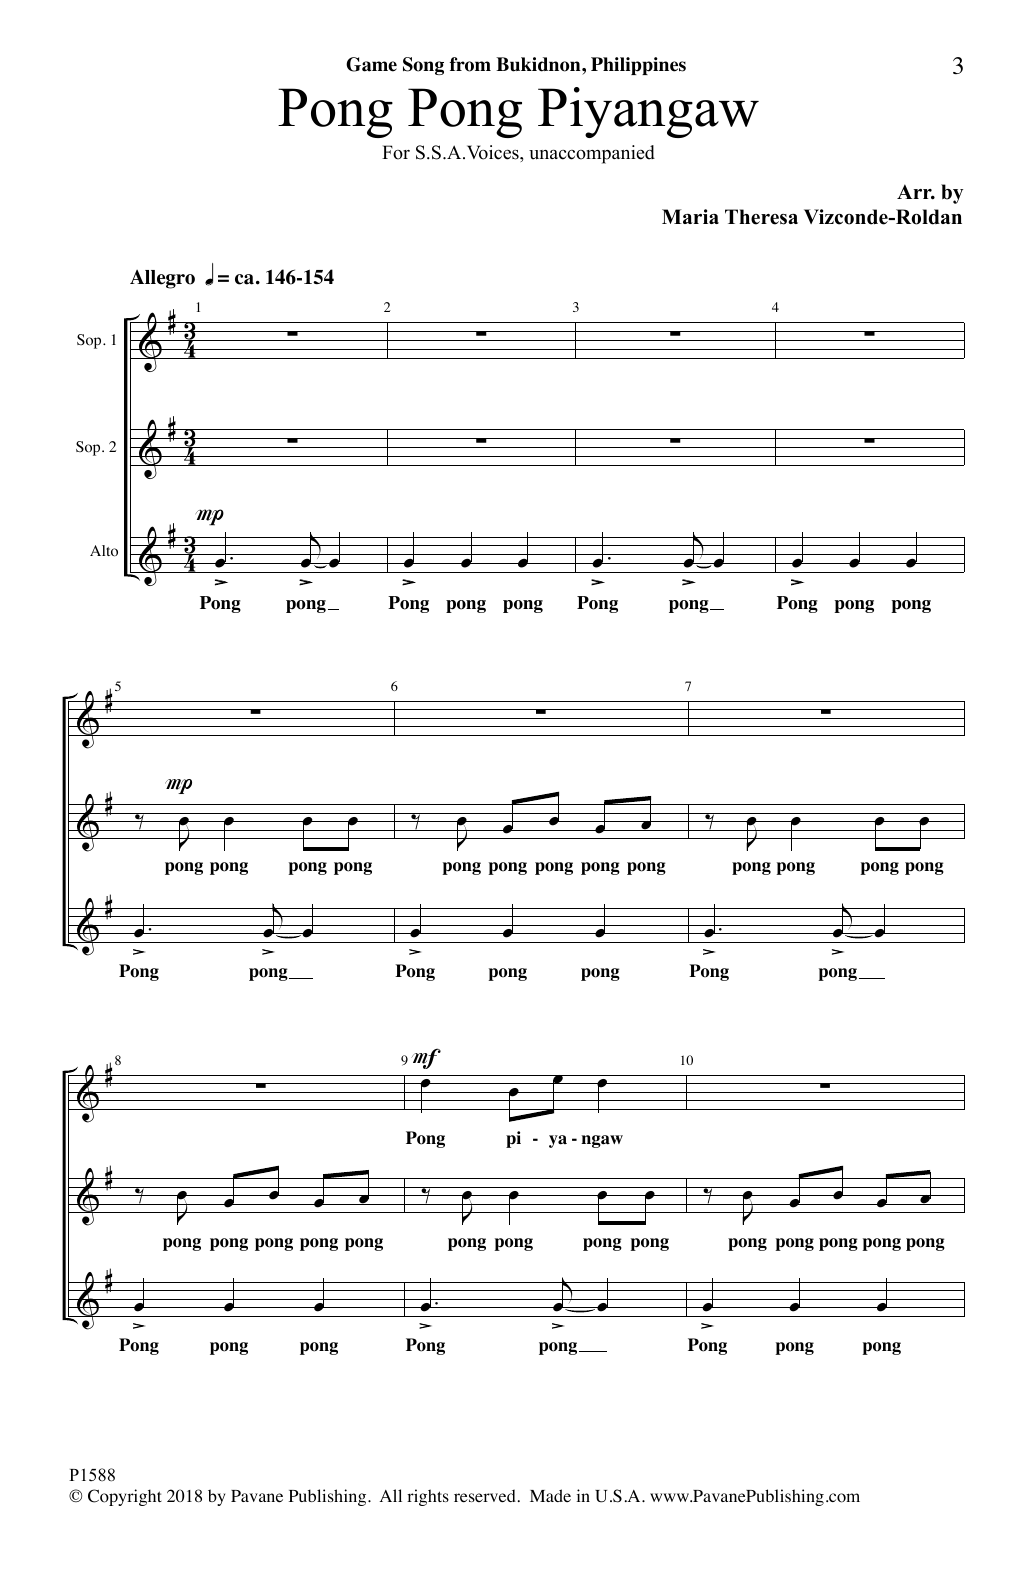 Download Maria Theresa Vizconde-Roldan Pong Pong Piyangaw Sheet Music